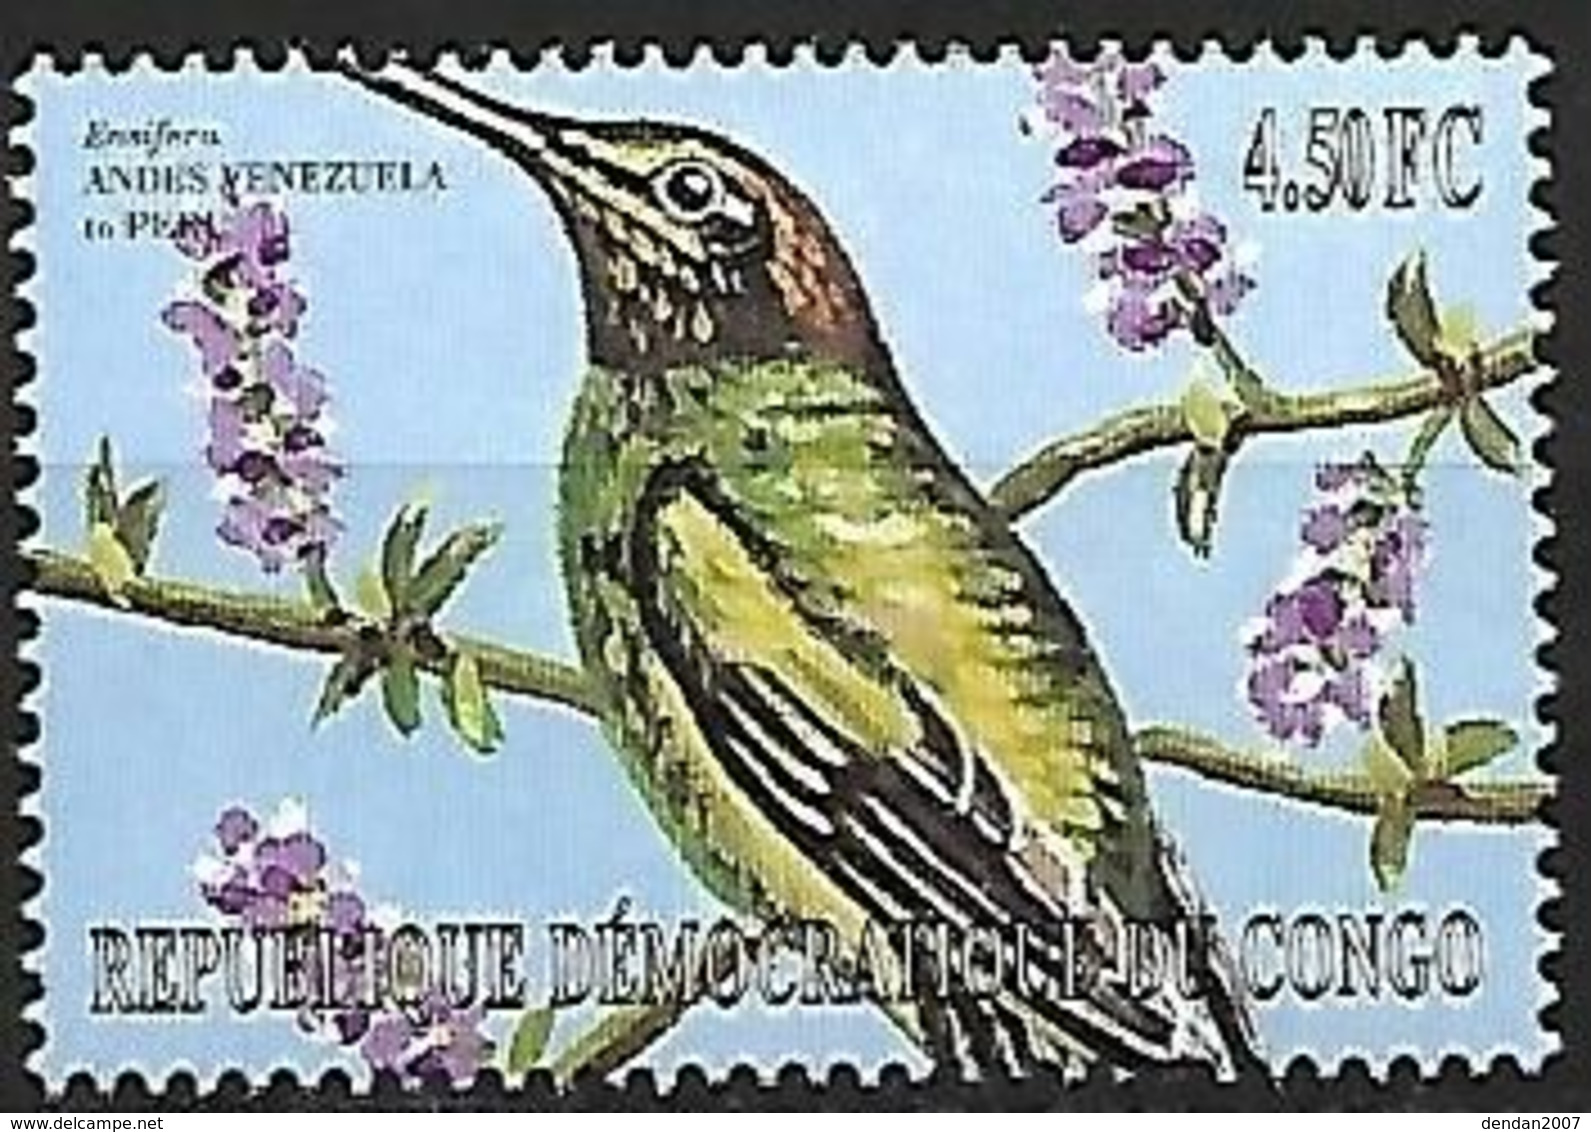 Congo (Kinshsasa) - MNH ** 2001 -     Sword-billed Hummingbird   - Ensifera Ensifera - Colibrì